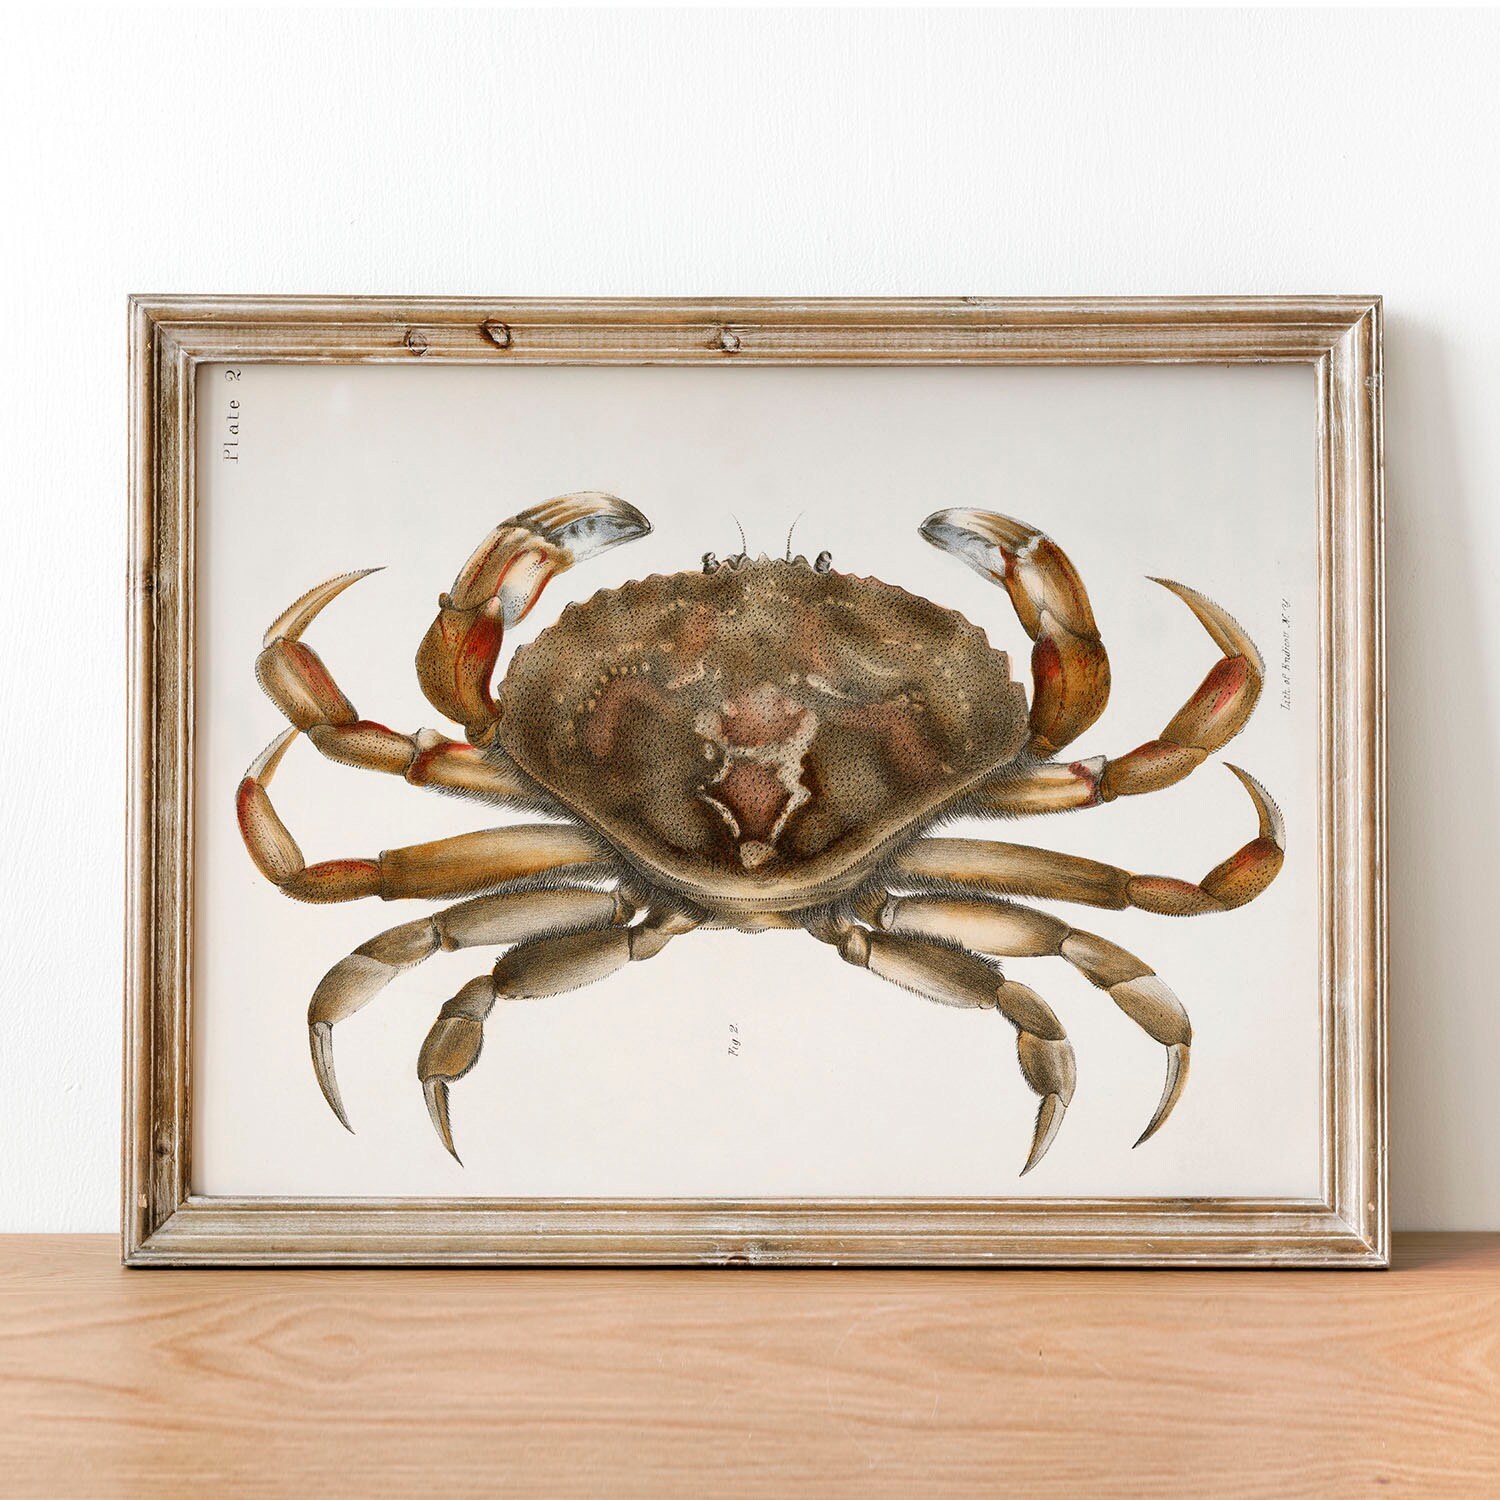 Crab Antique Print Illustration, Vintage Poster, Fishing Wall Art